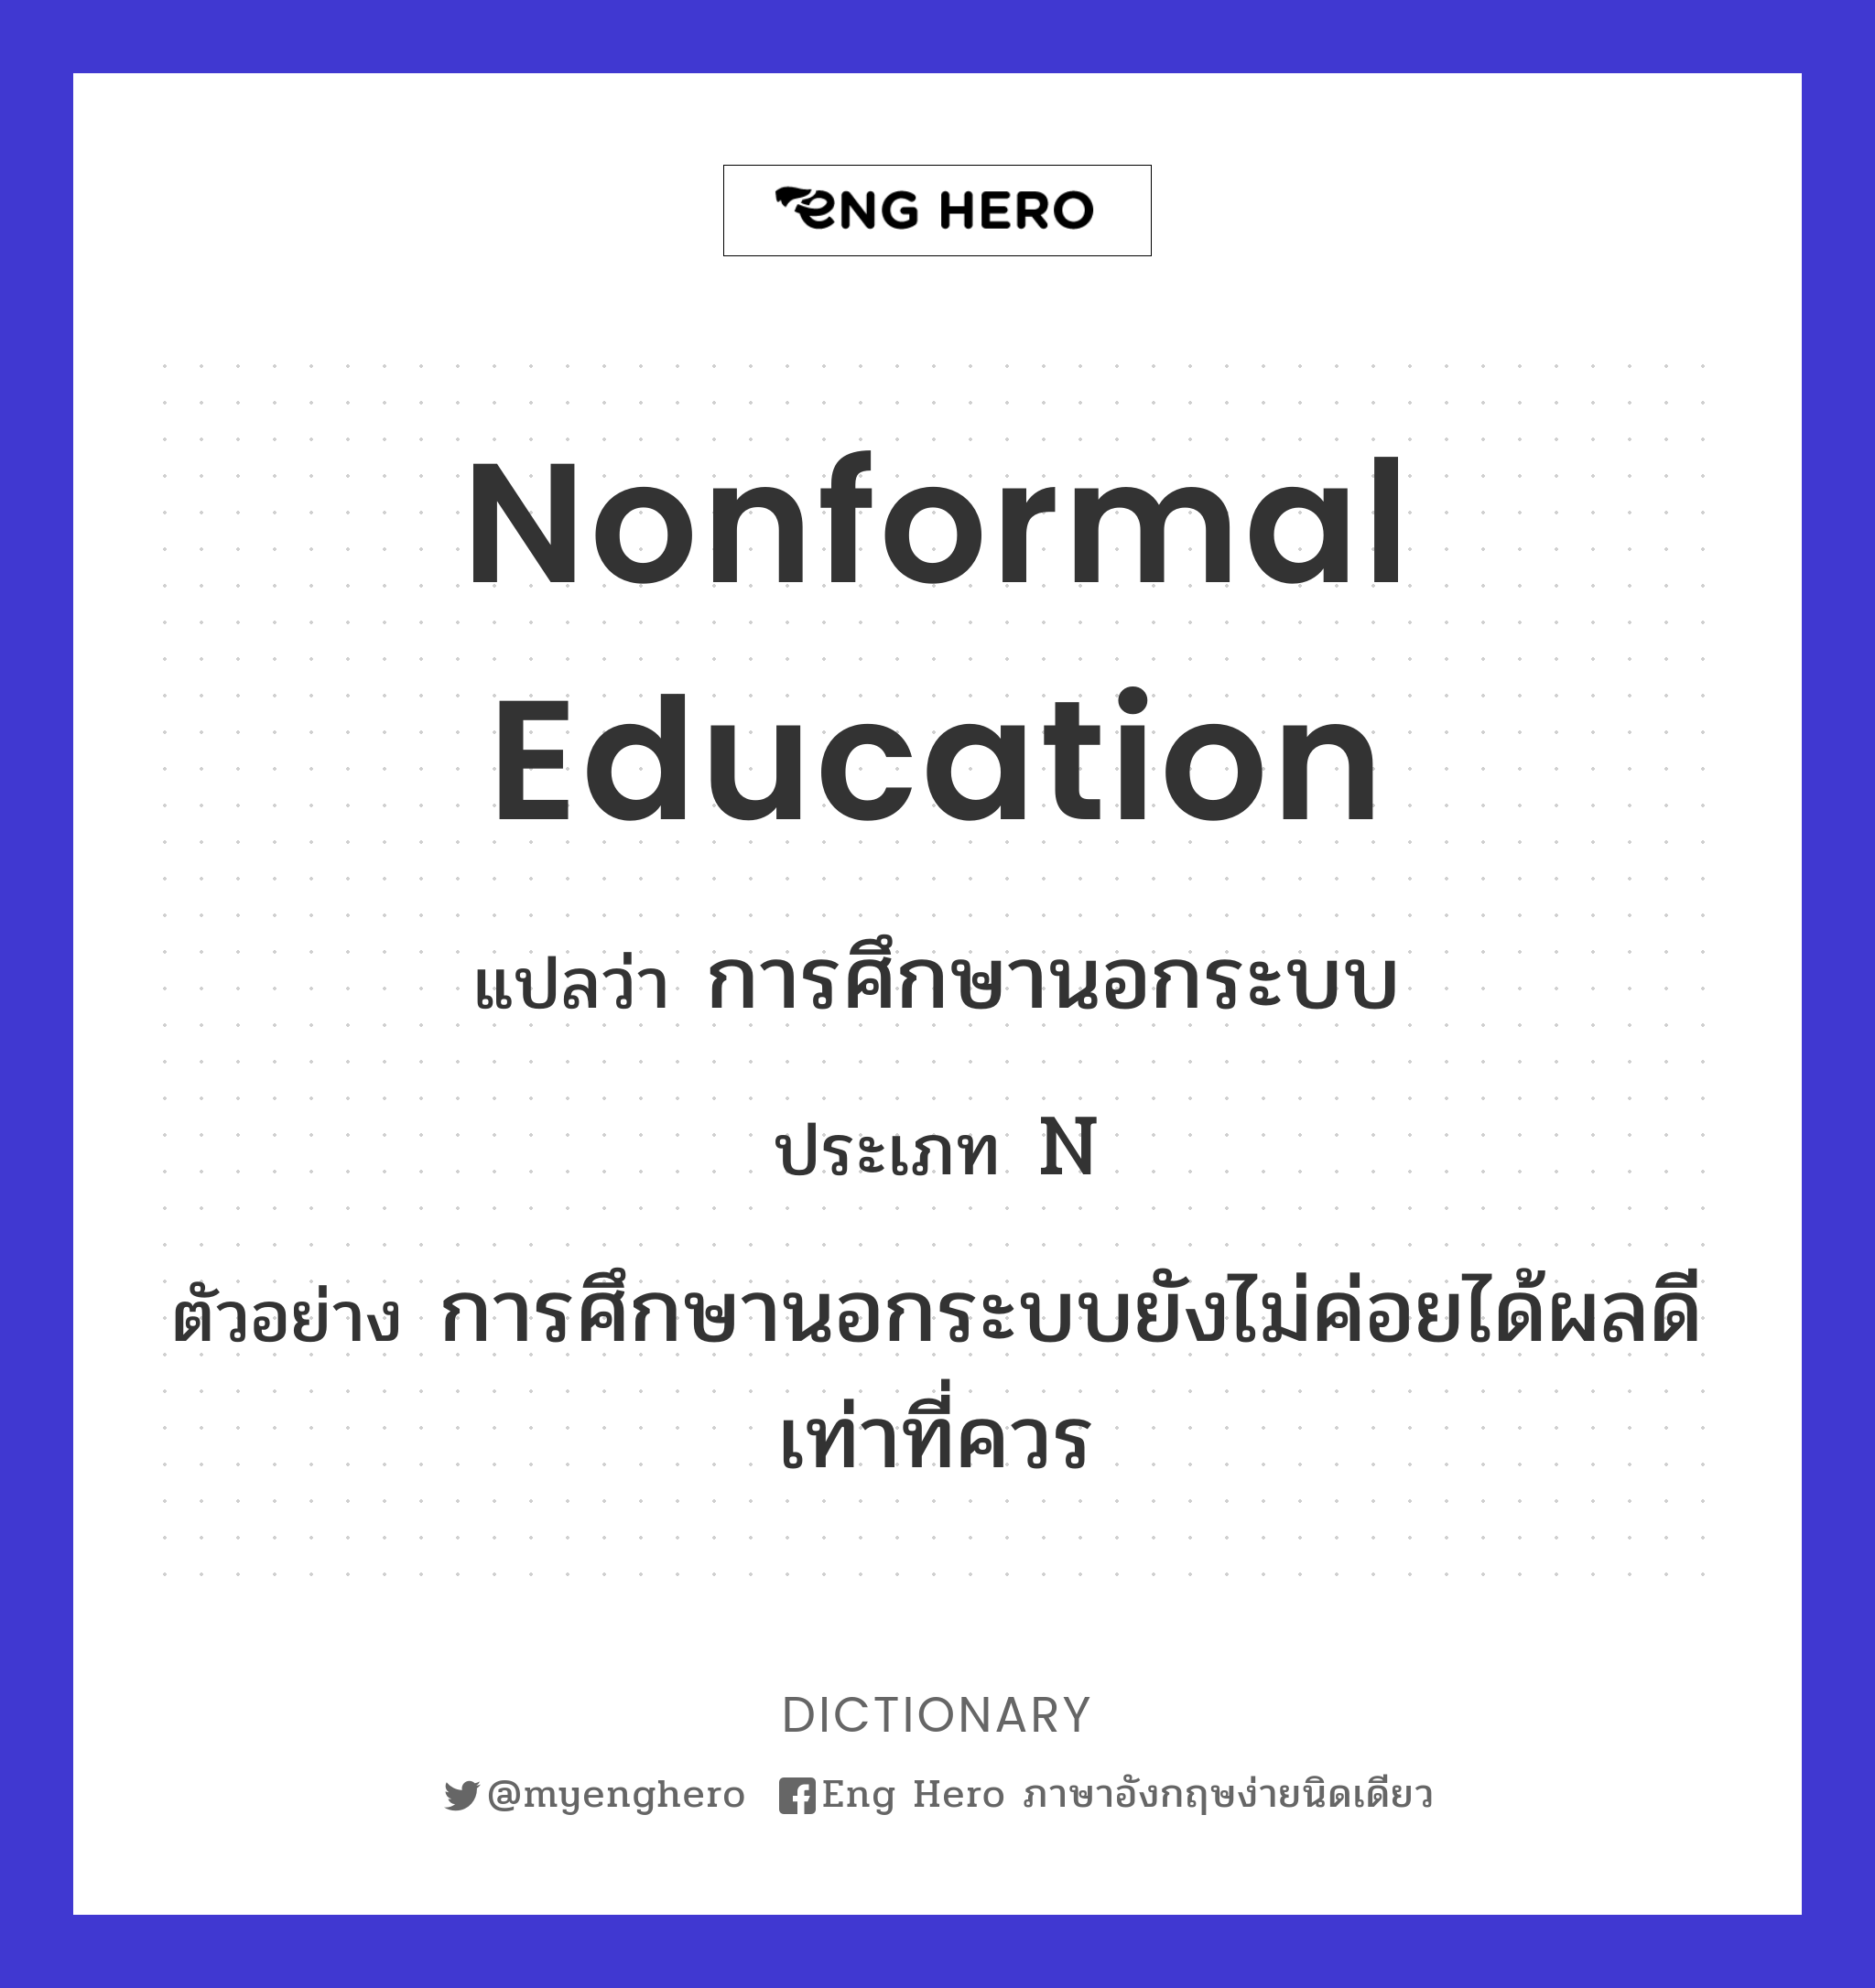 nonformal education